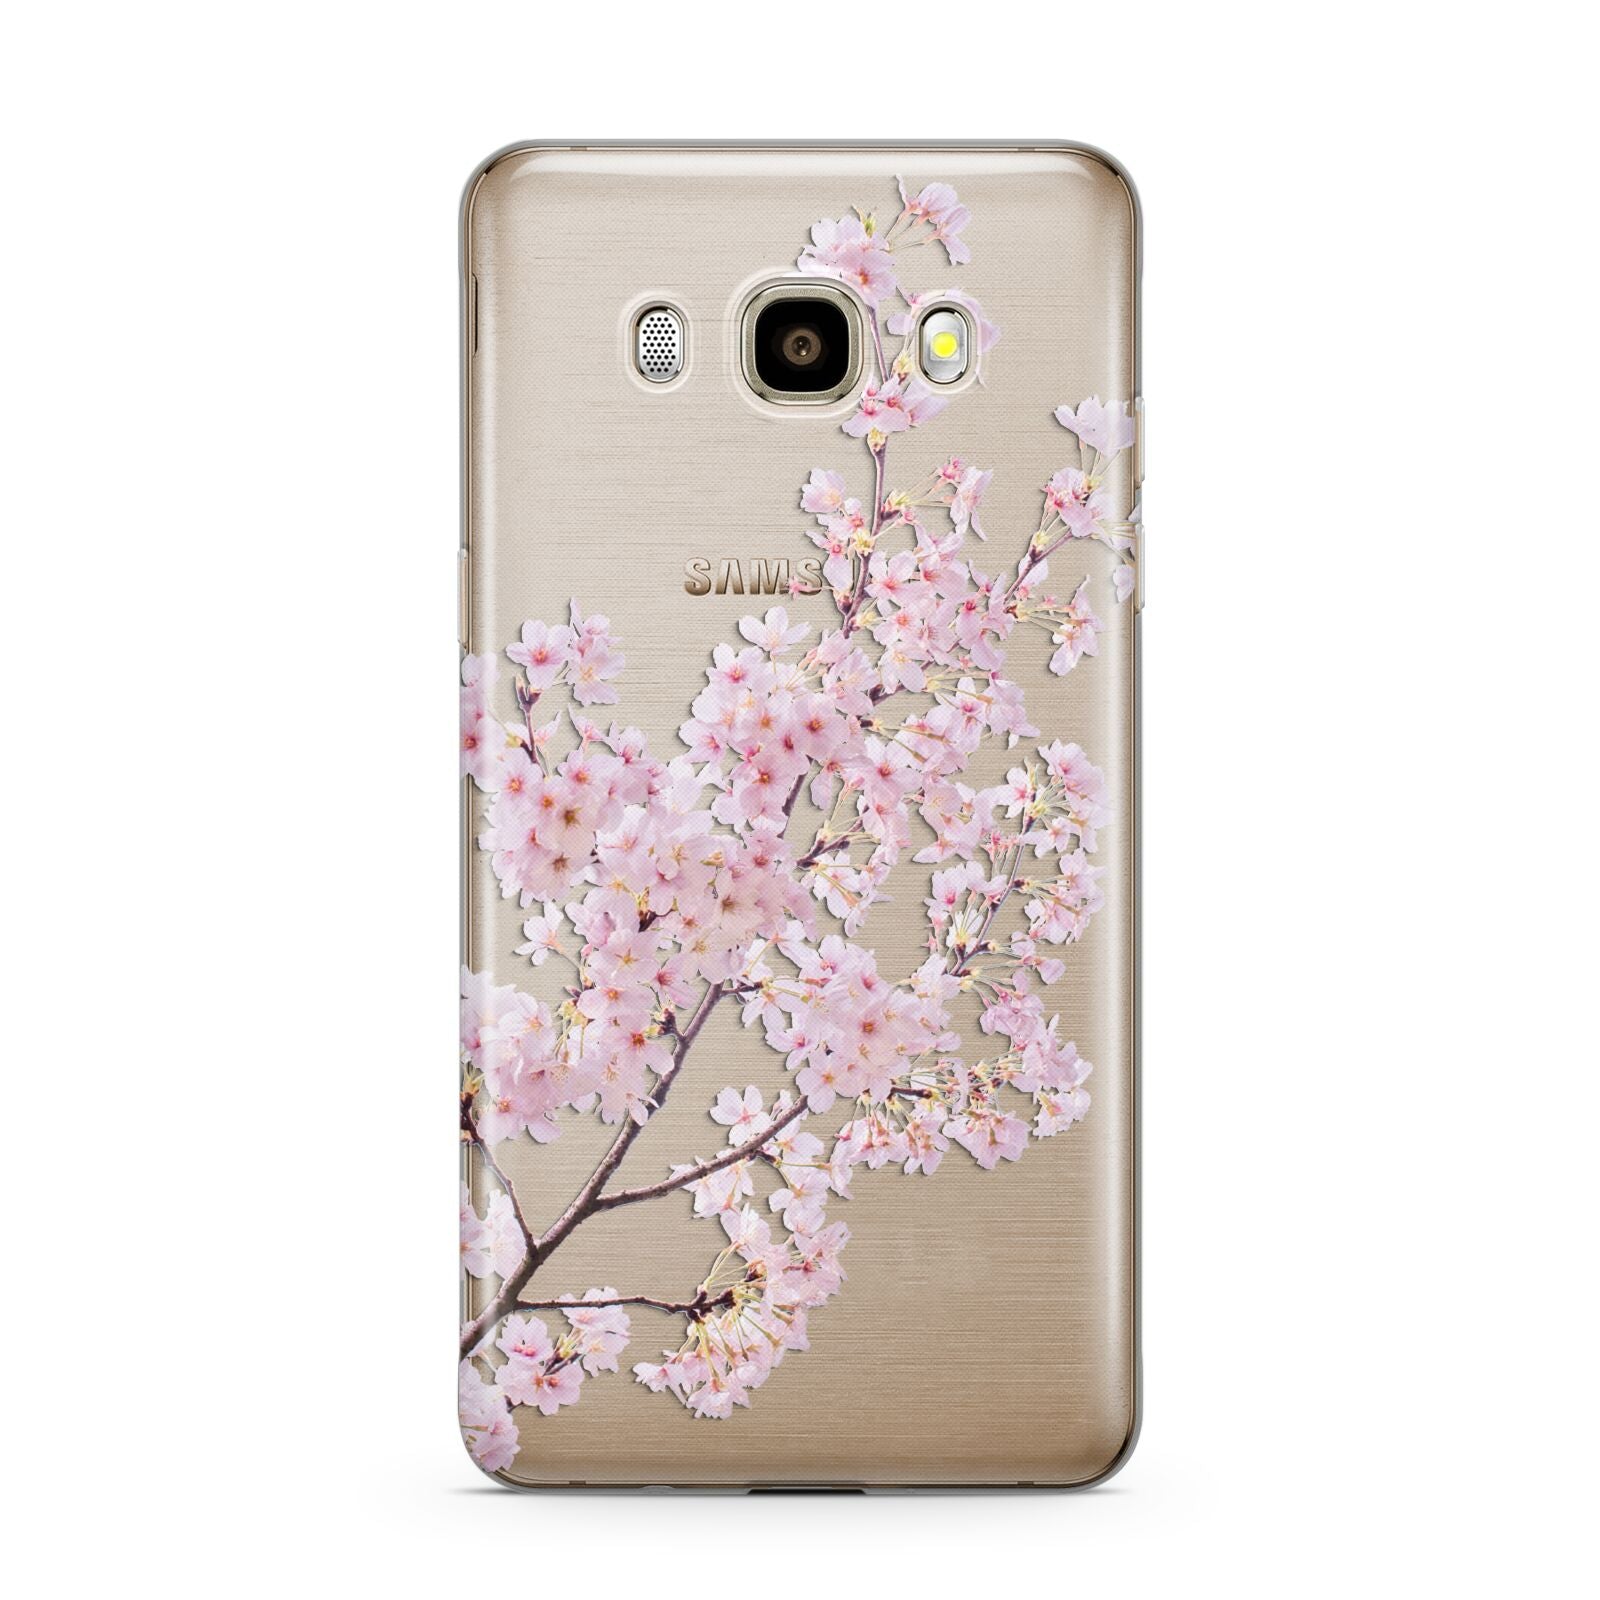 Blossom Tree Samsung Galaxy J7 2016 Case on gold phone